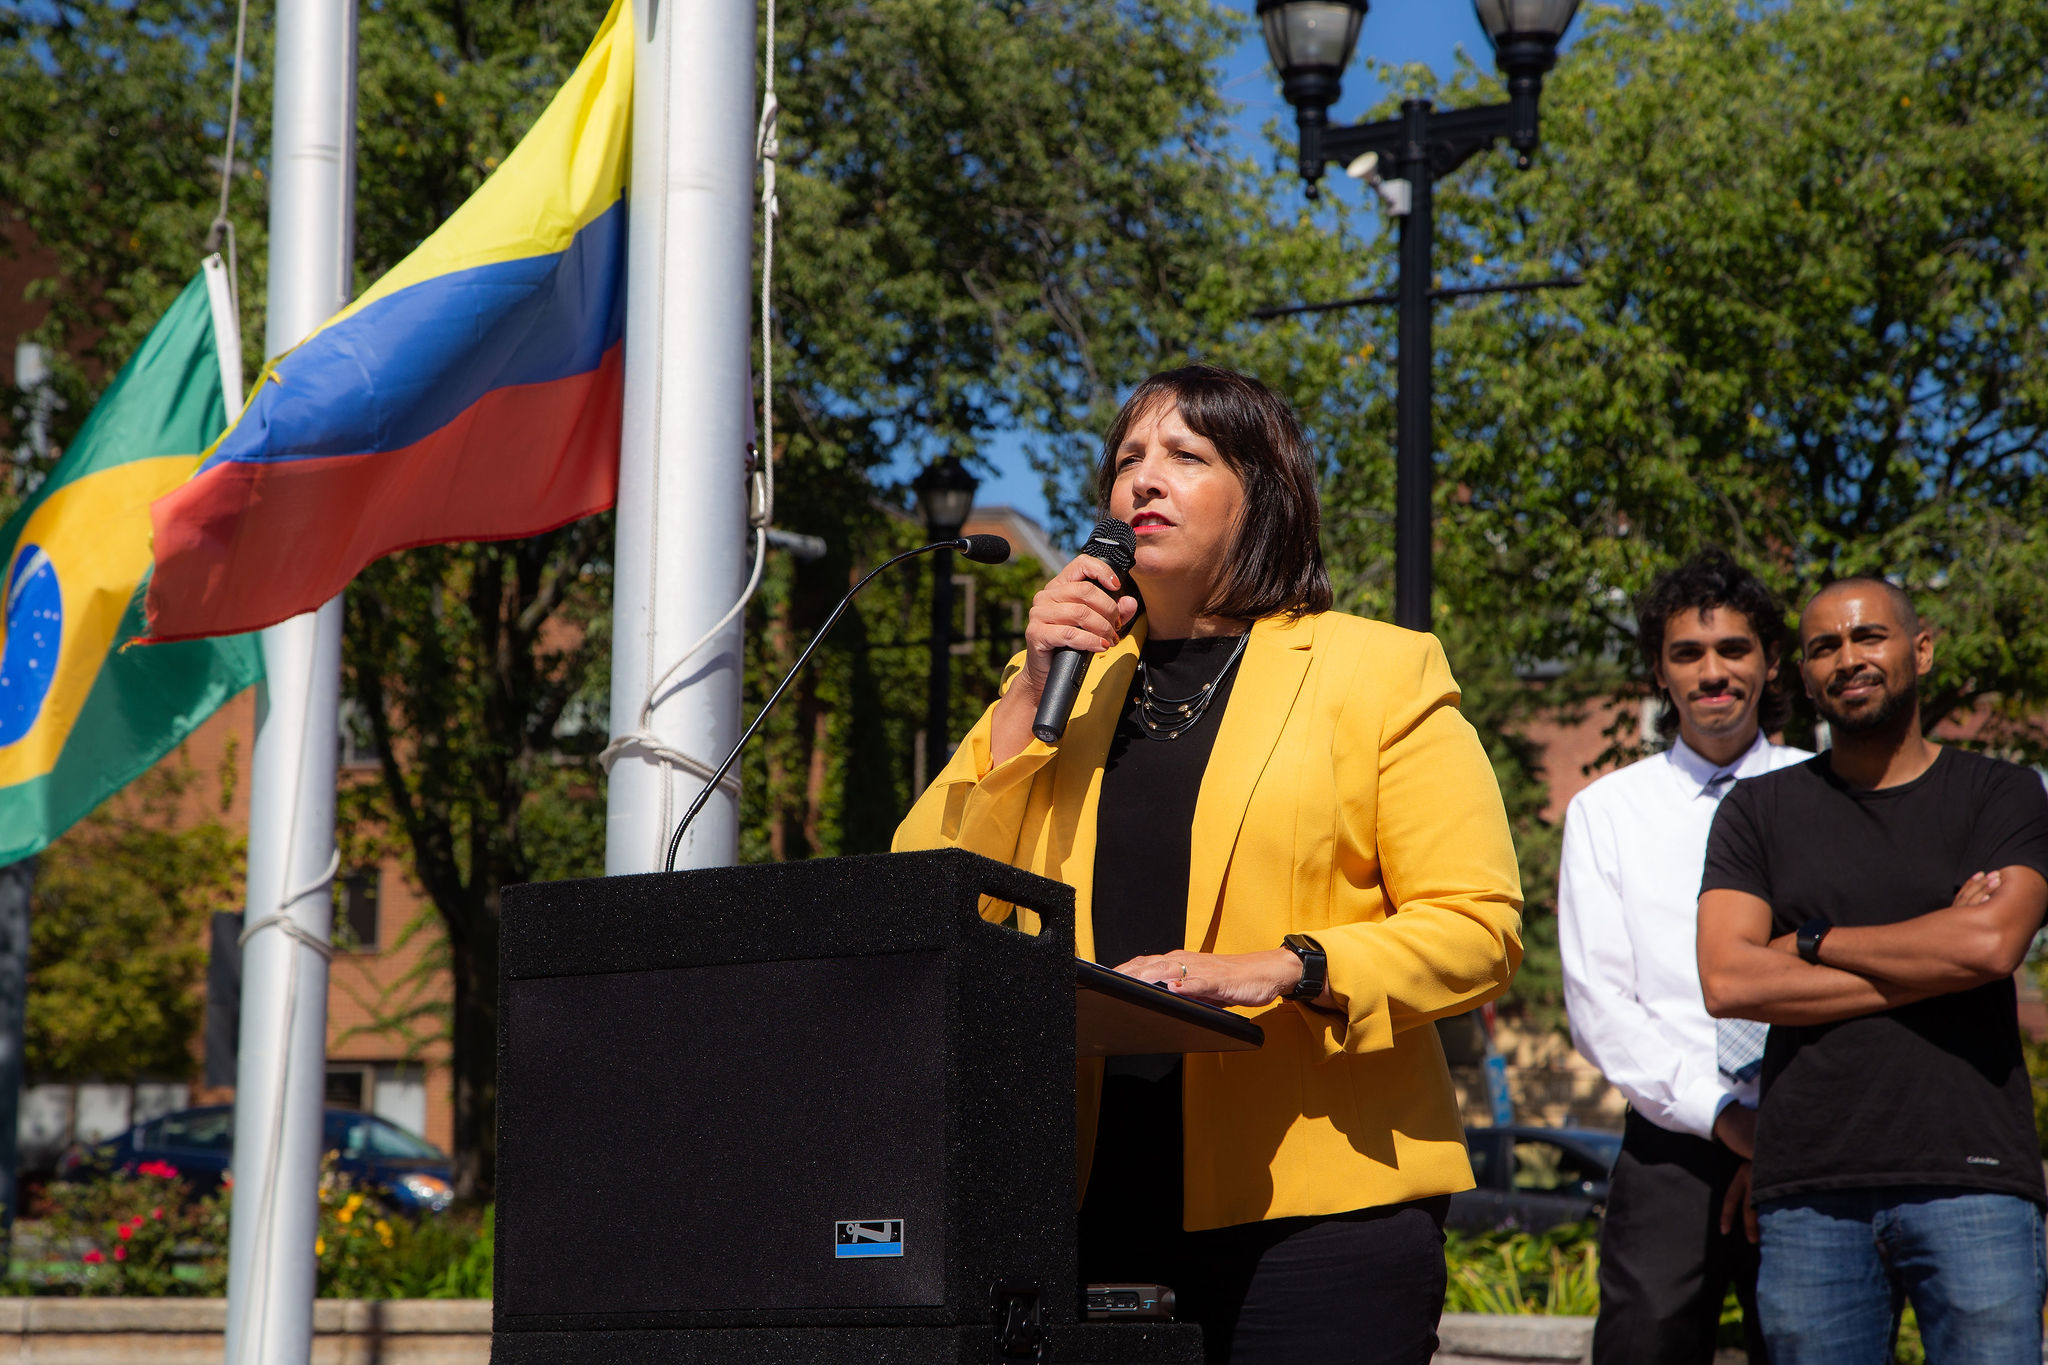 Mayor Kim Driscoll speaks behind the podium during the Latinx heritage month flag raising